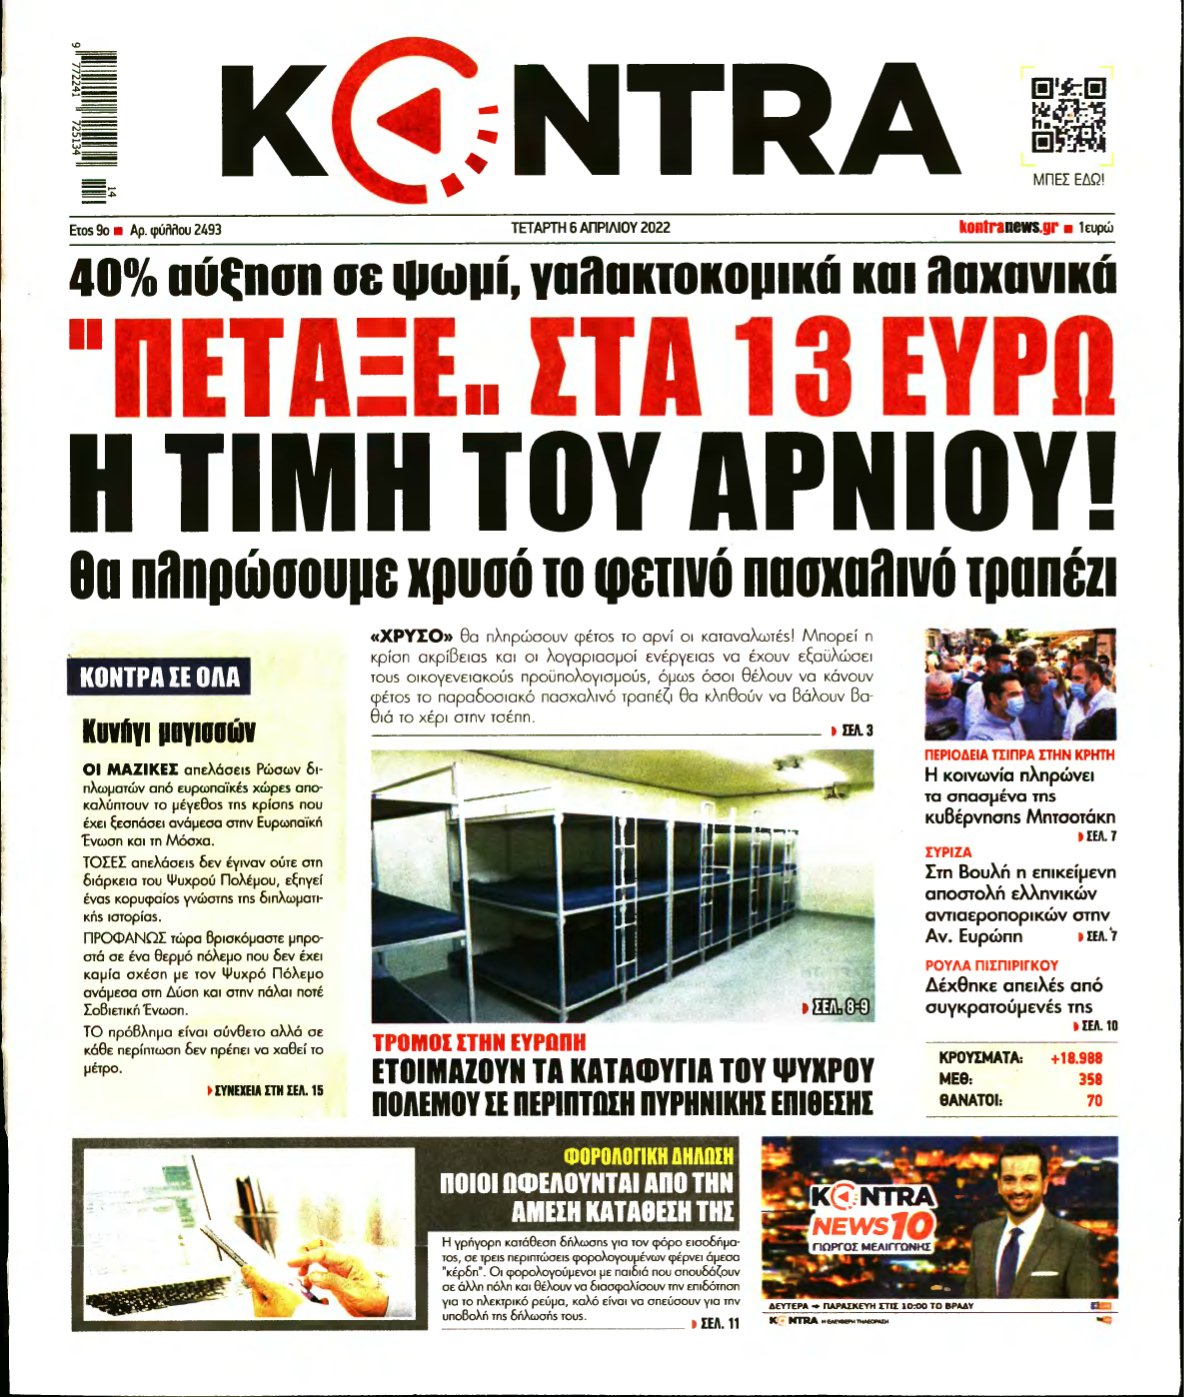 KONTRA NEWS – 06/04/2022